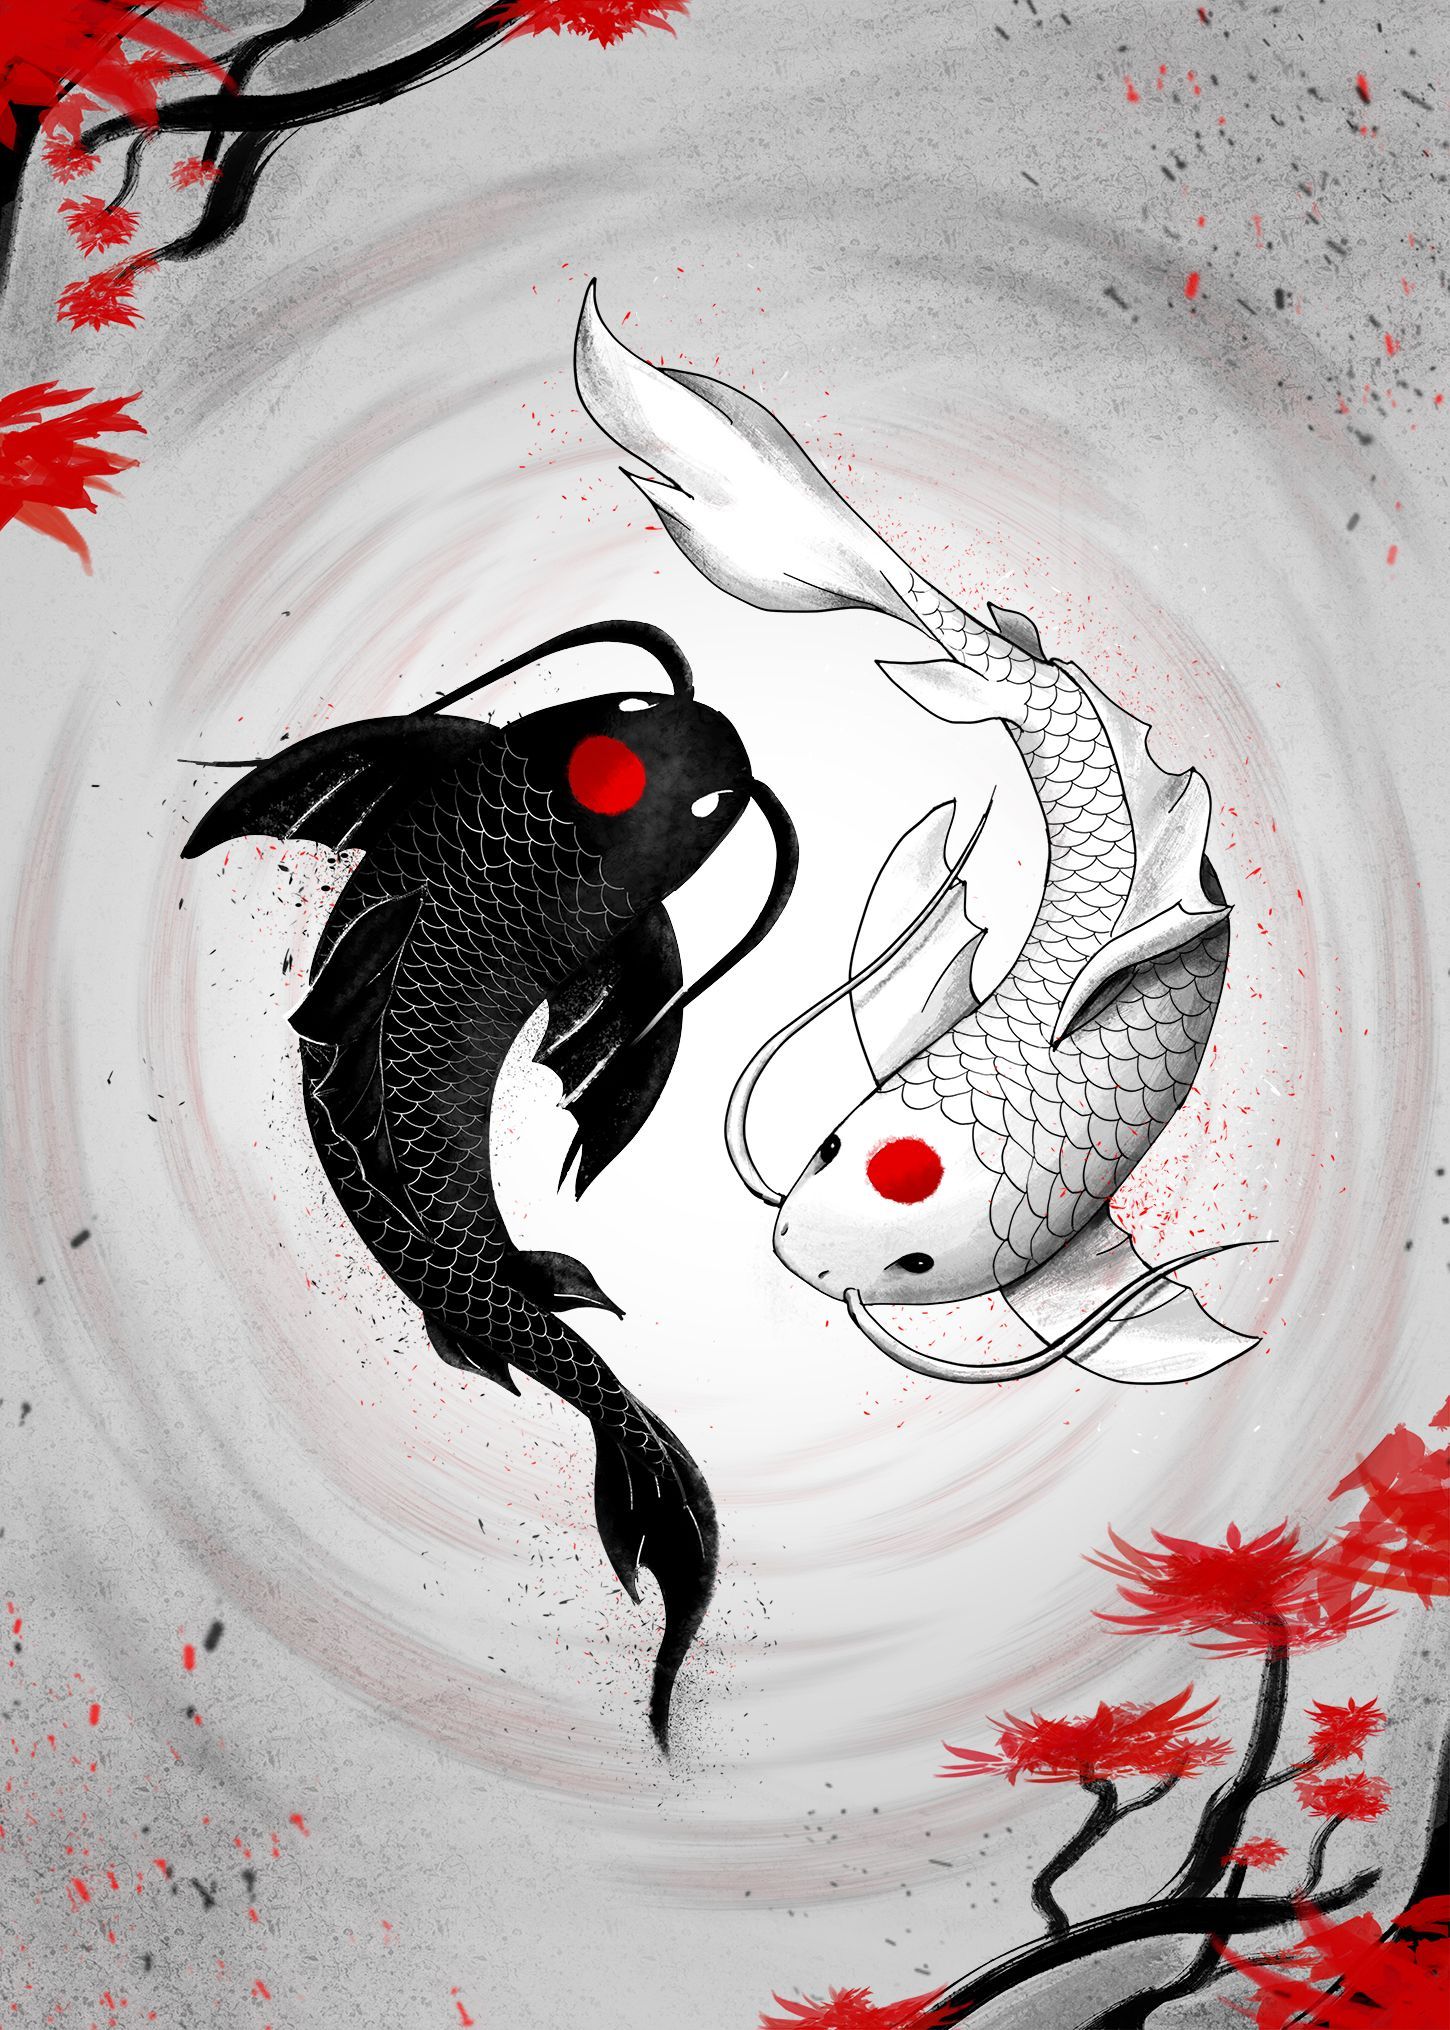 Japanese Koi Fish Art. Koi art, Fish art, Koy fish drawing